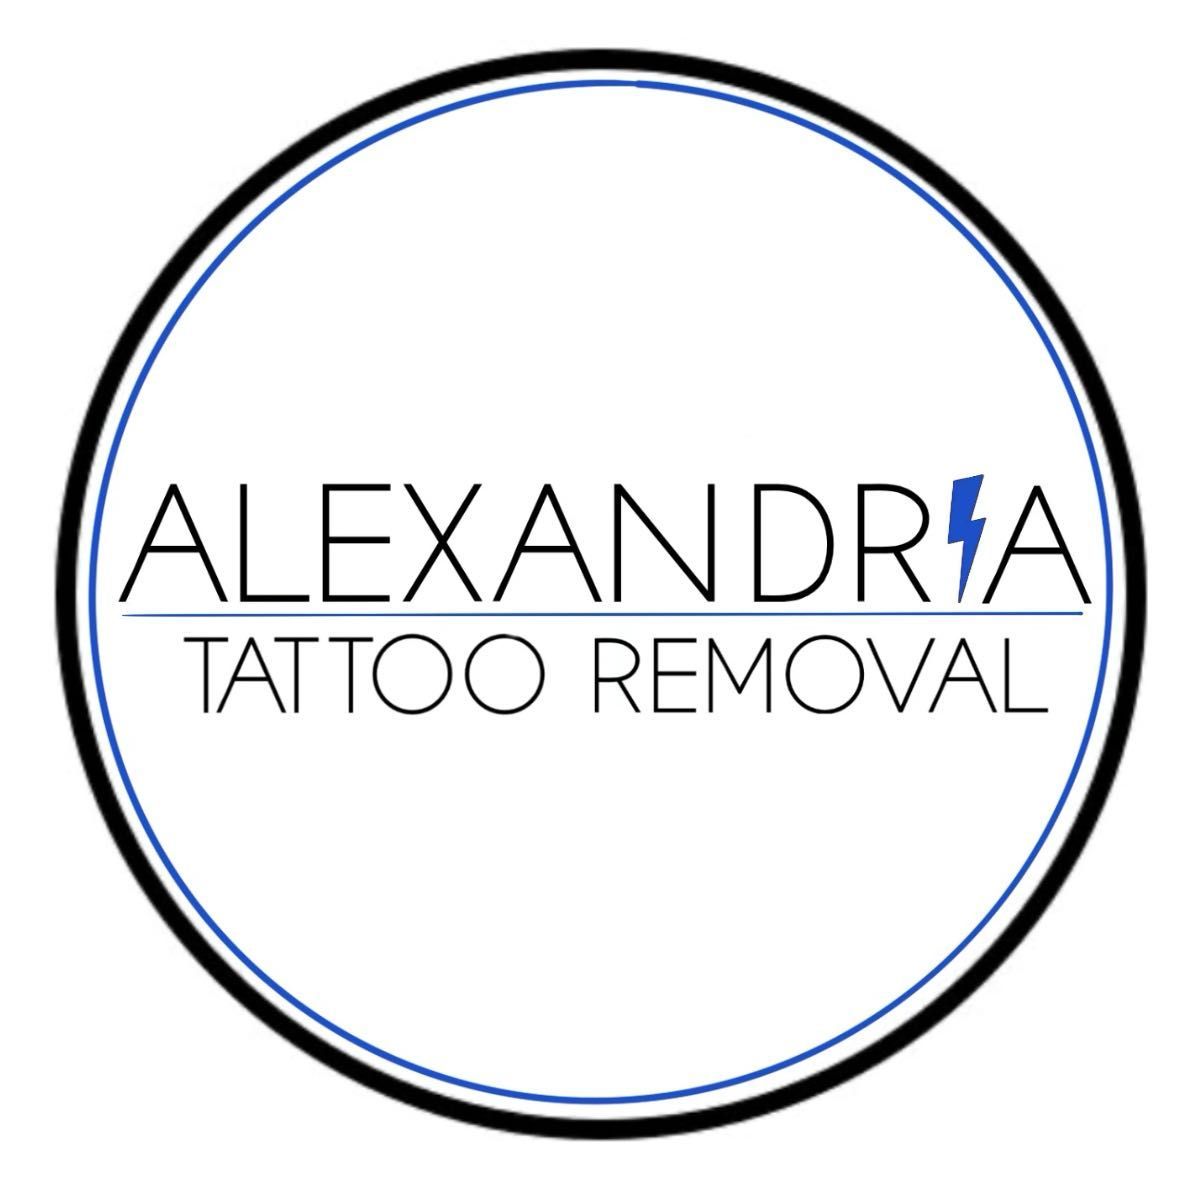 Alexandria Tattoo Removal, 25 S Quaker Ln, Suite 7, Alexandria, 22314